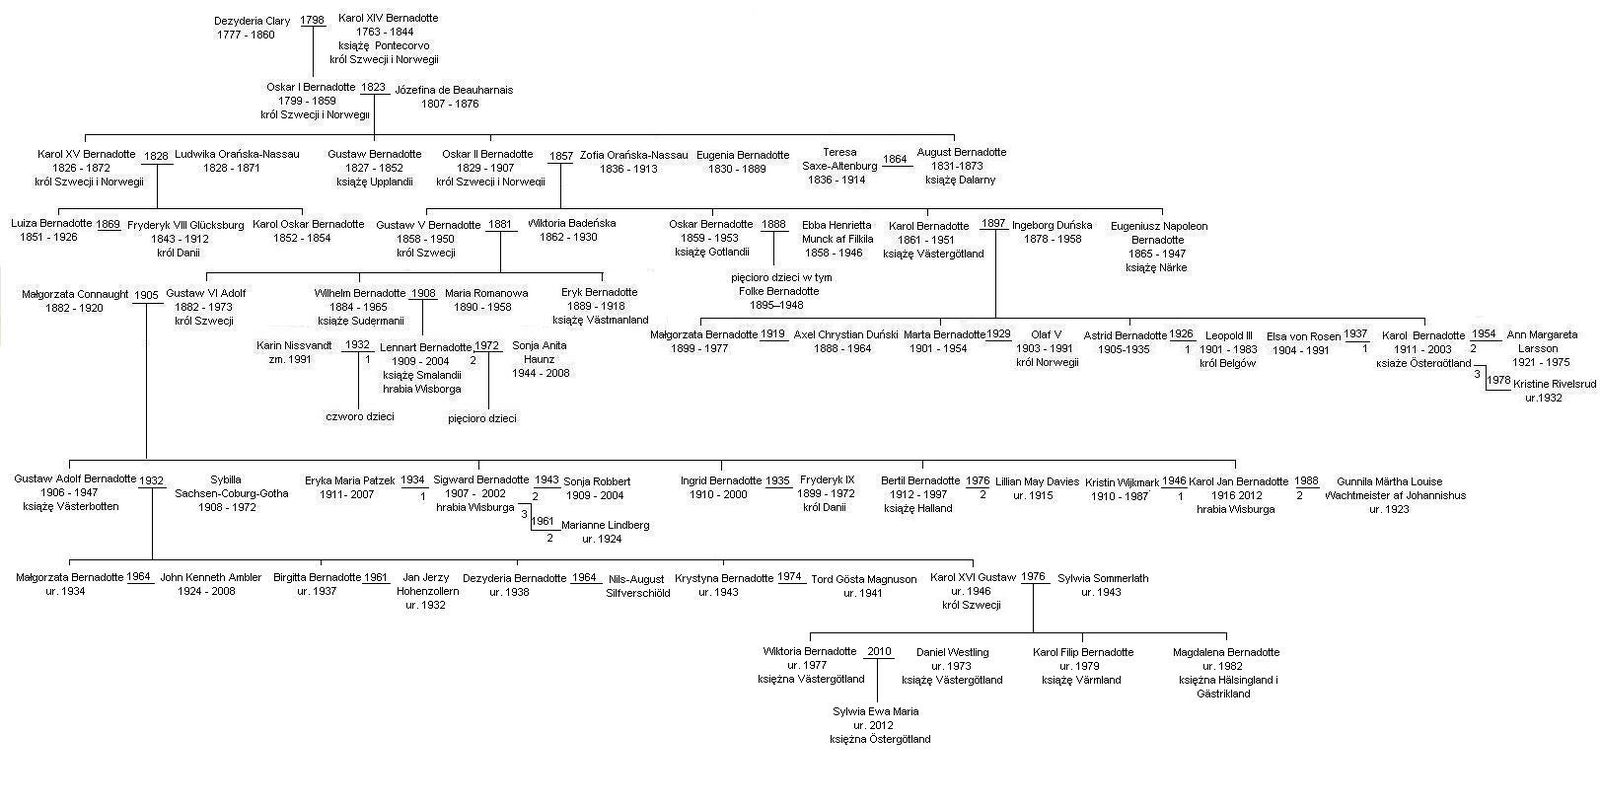 Bernadotte family tree.JPG